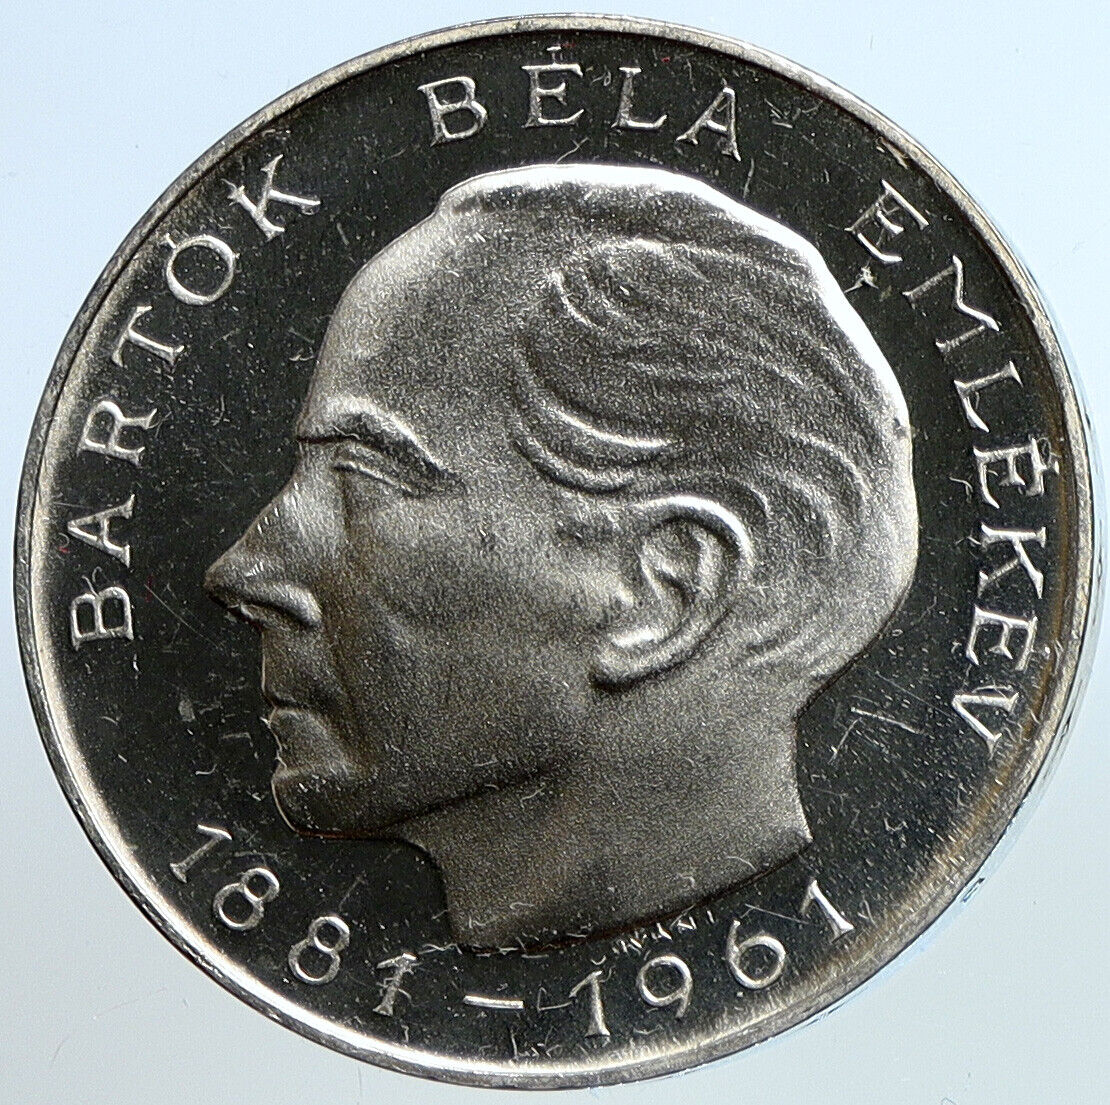 1961 HUNGARY Music OPERA Antique Bela Bartok Proof Silver 50 Forint Coin i113408